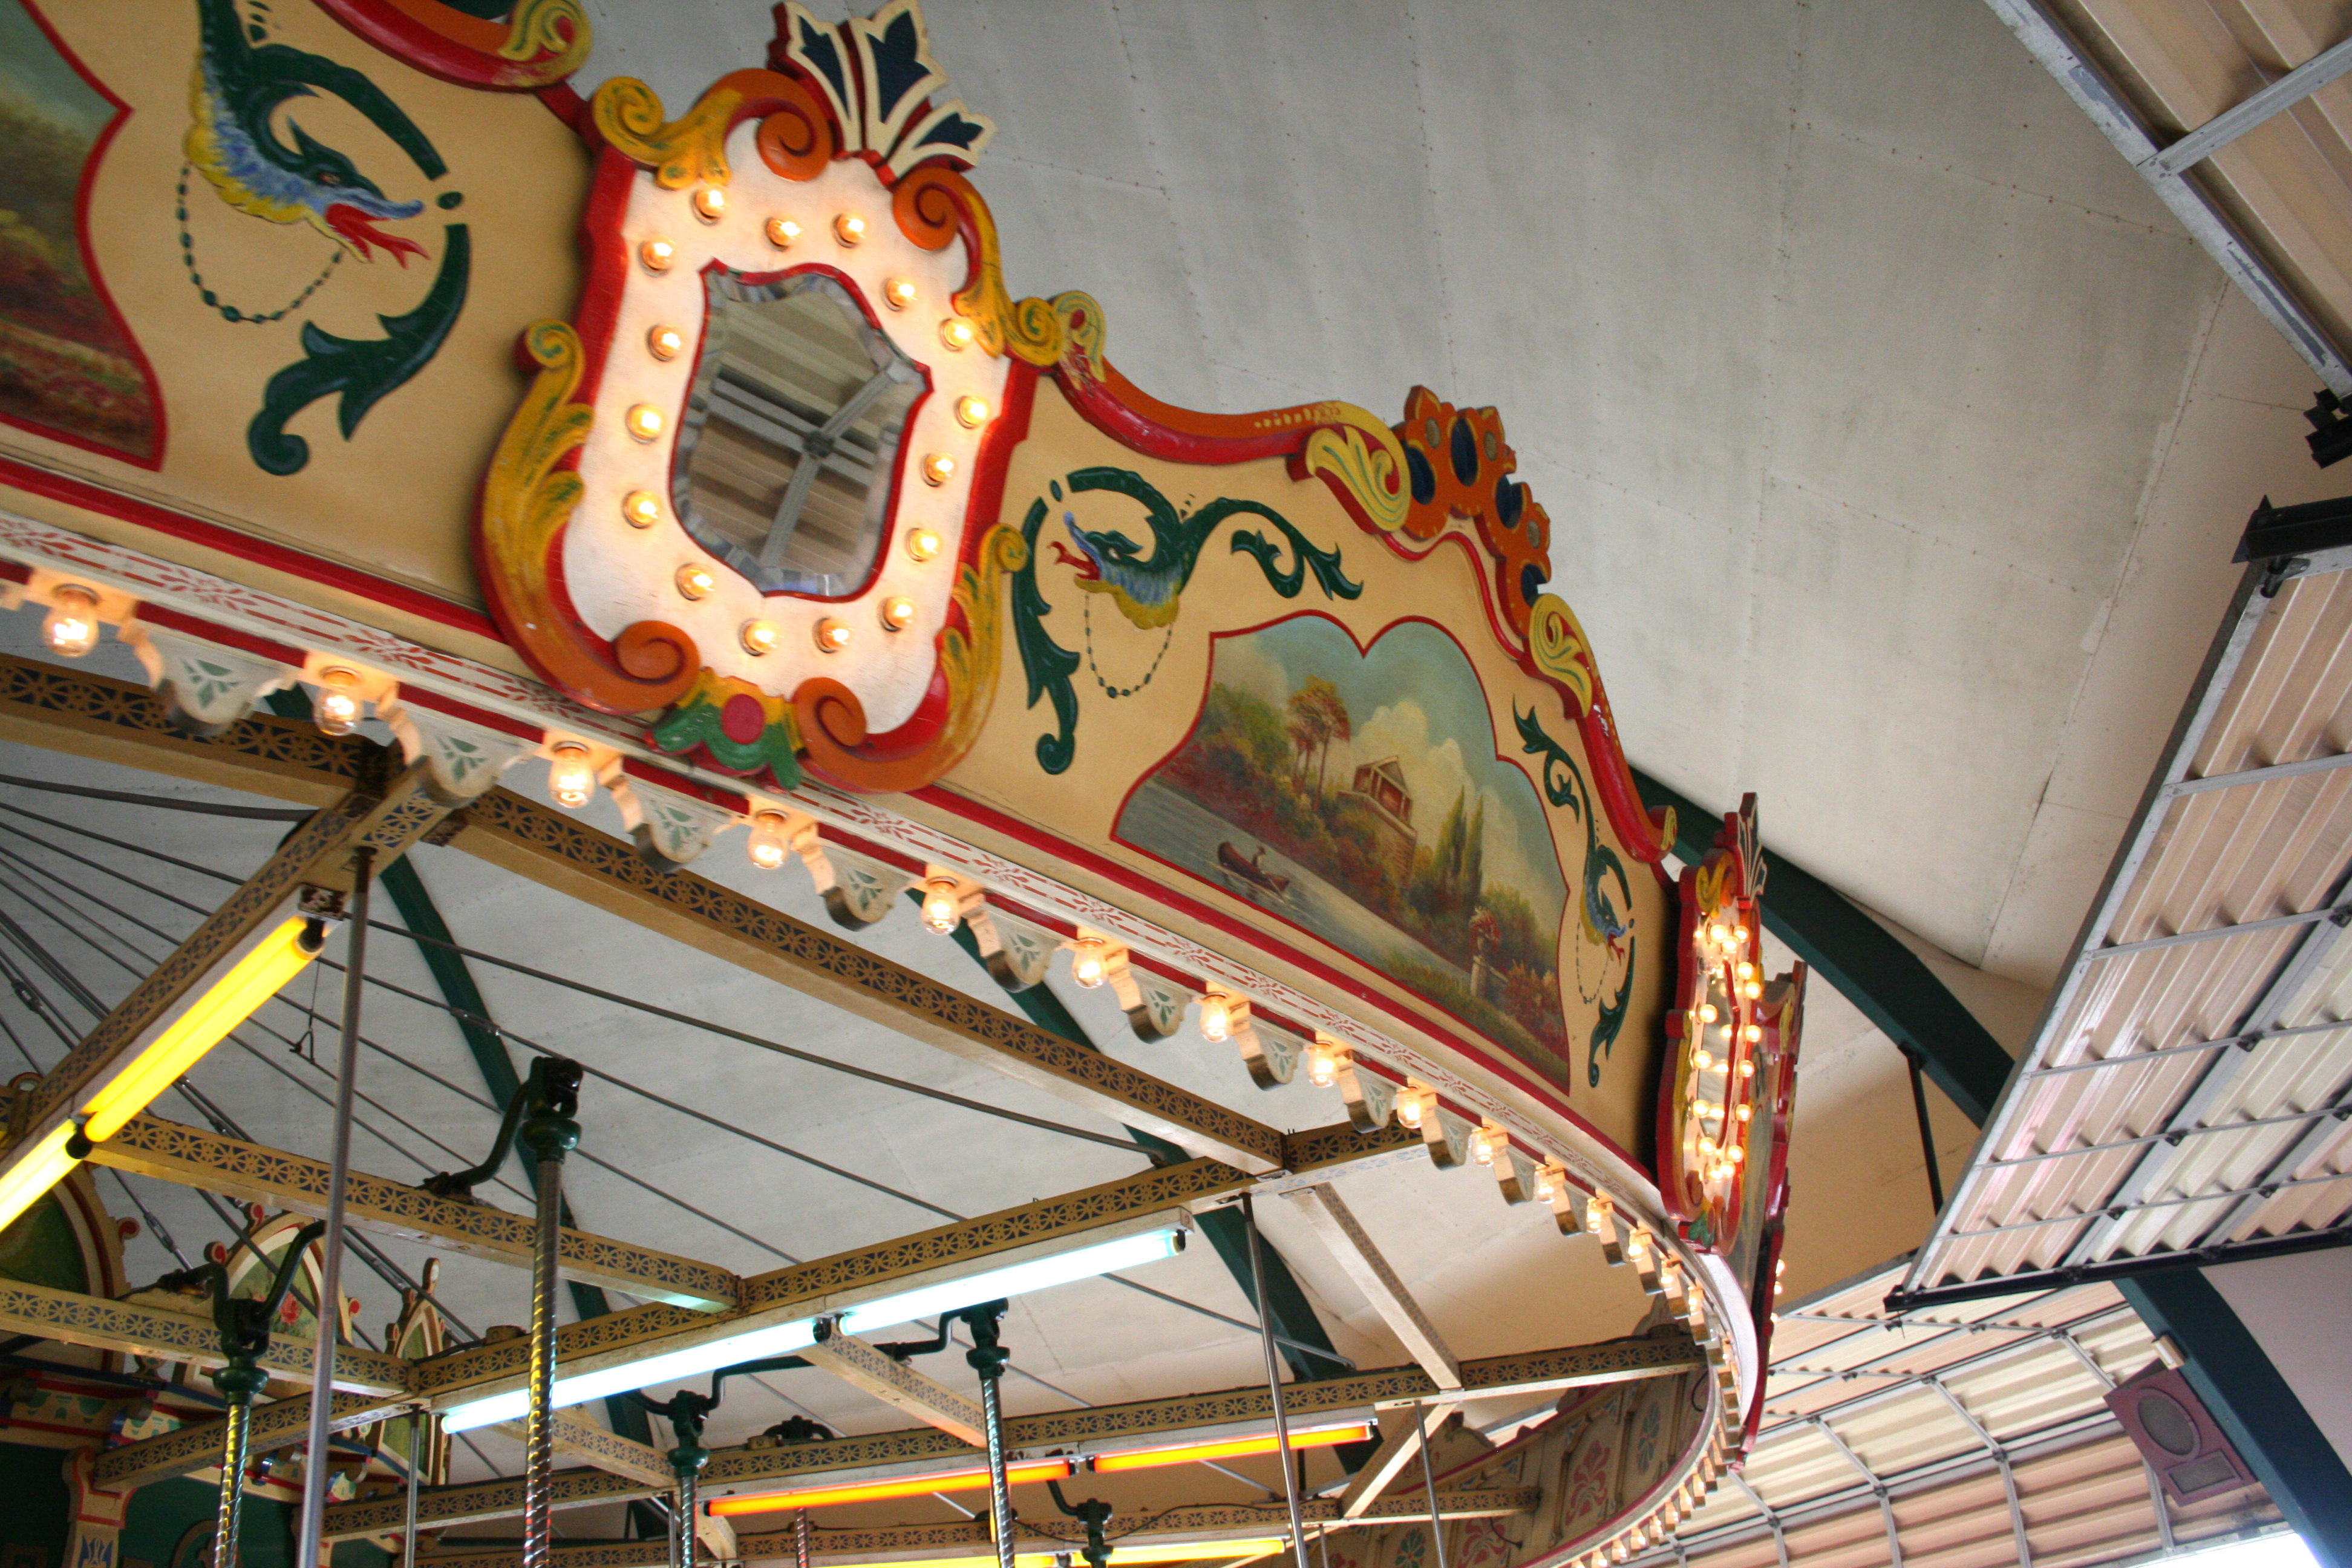 File:Kiddieland Amusement Park carousel top.jpg - Wikimedia Commons